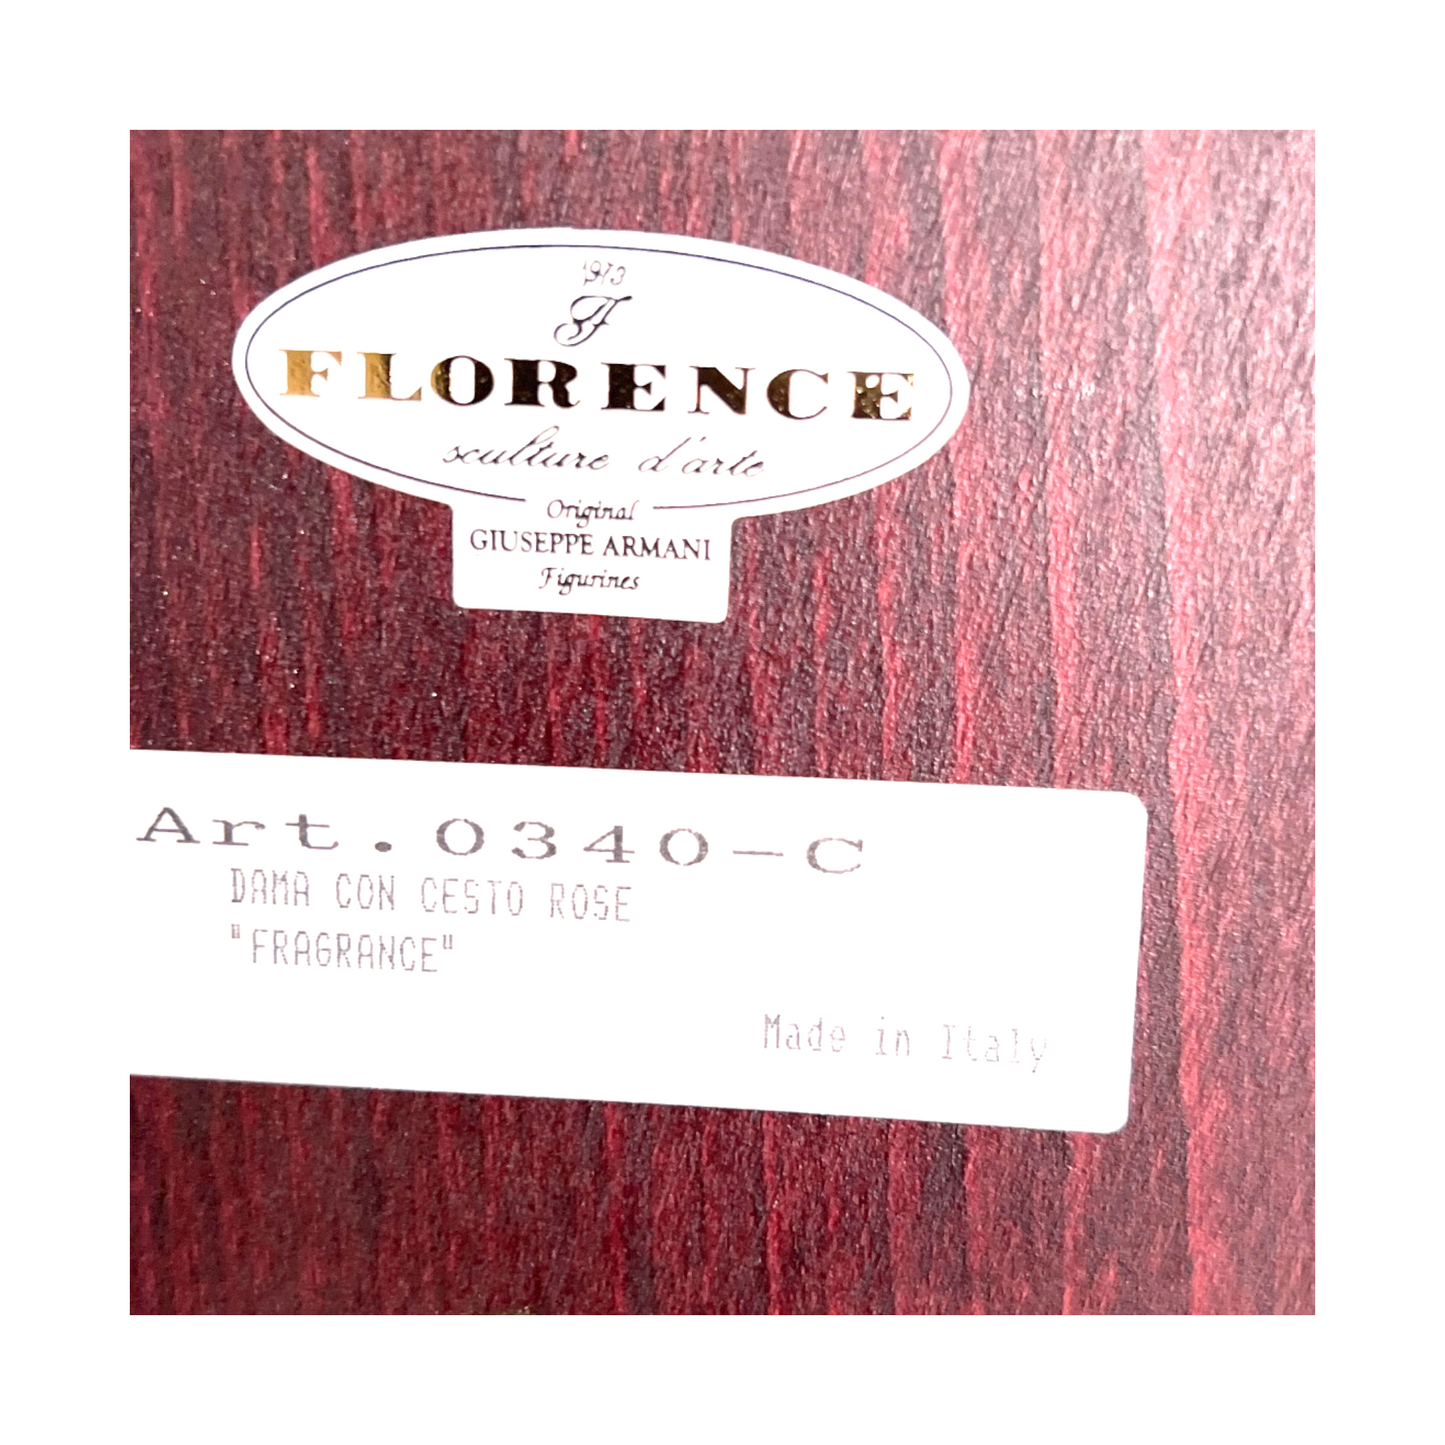 Giuseppe Armani Florence - FRAGRANCE 0340C - LIMITED EDITION 344/3000 - Original Box - 19"